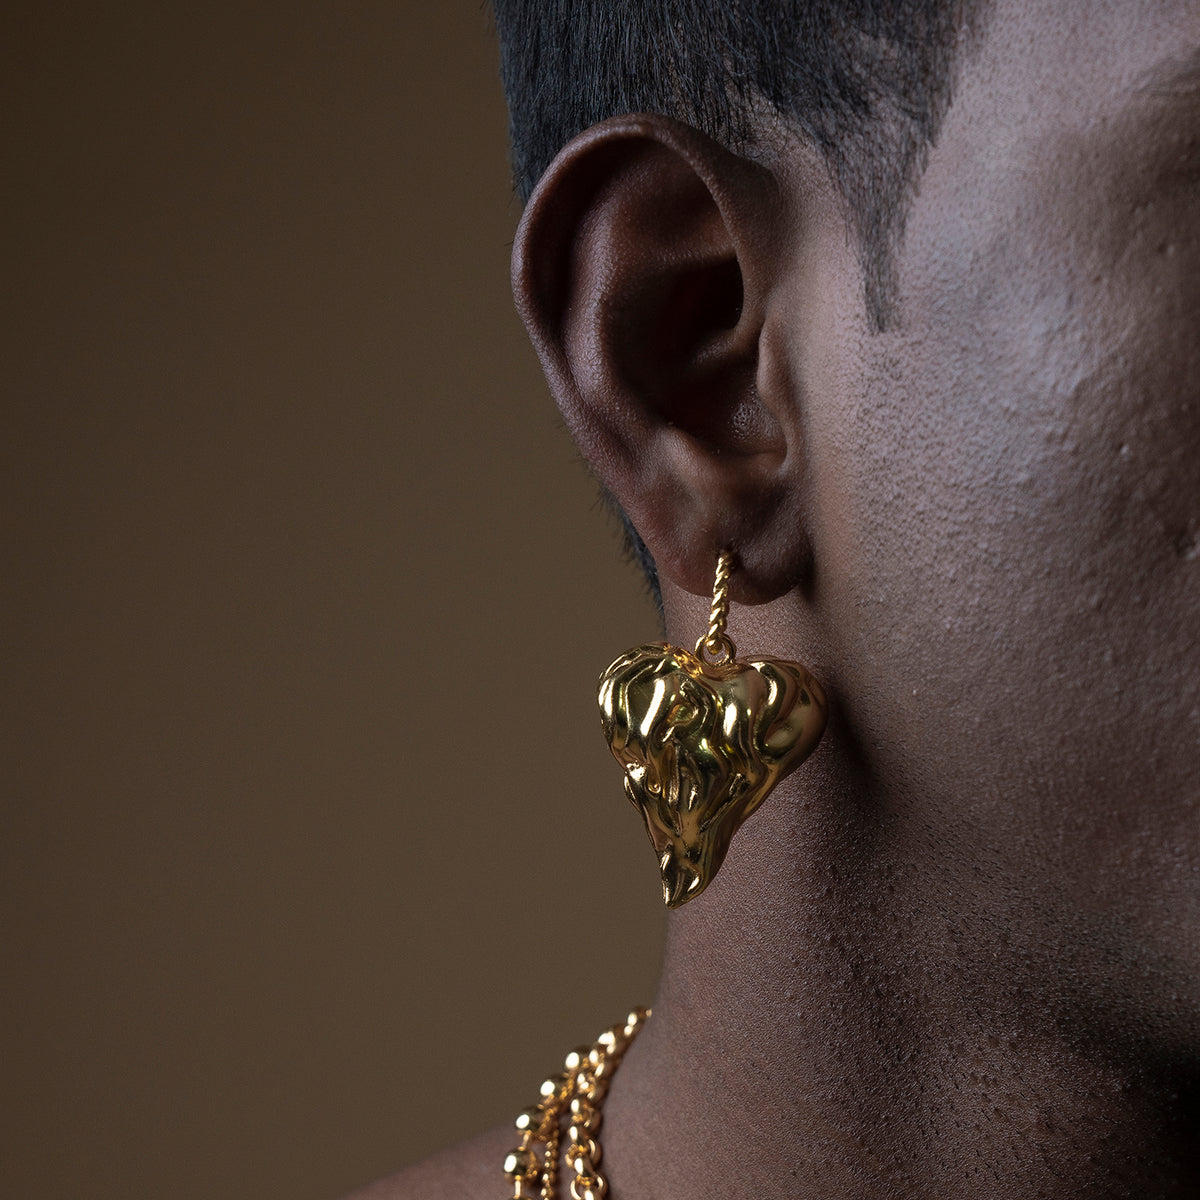 Cardi Earrings - Gold Tone